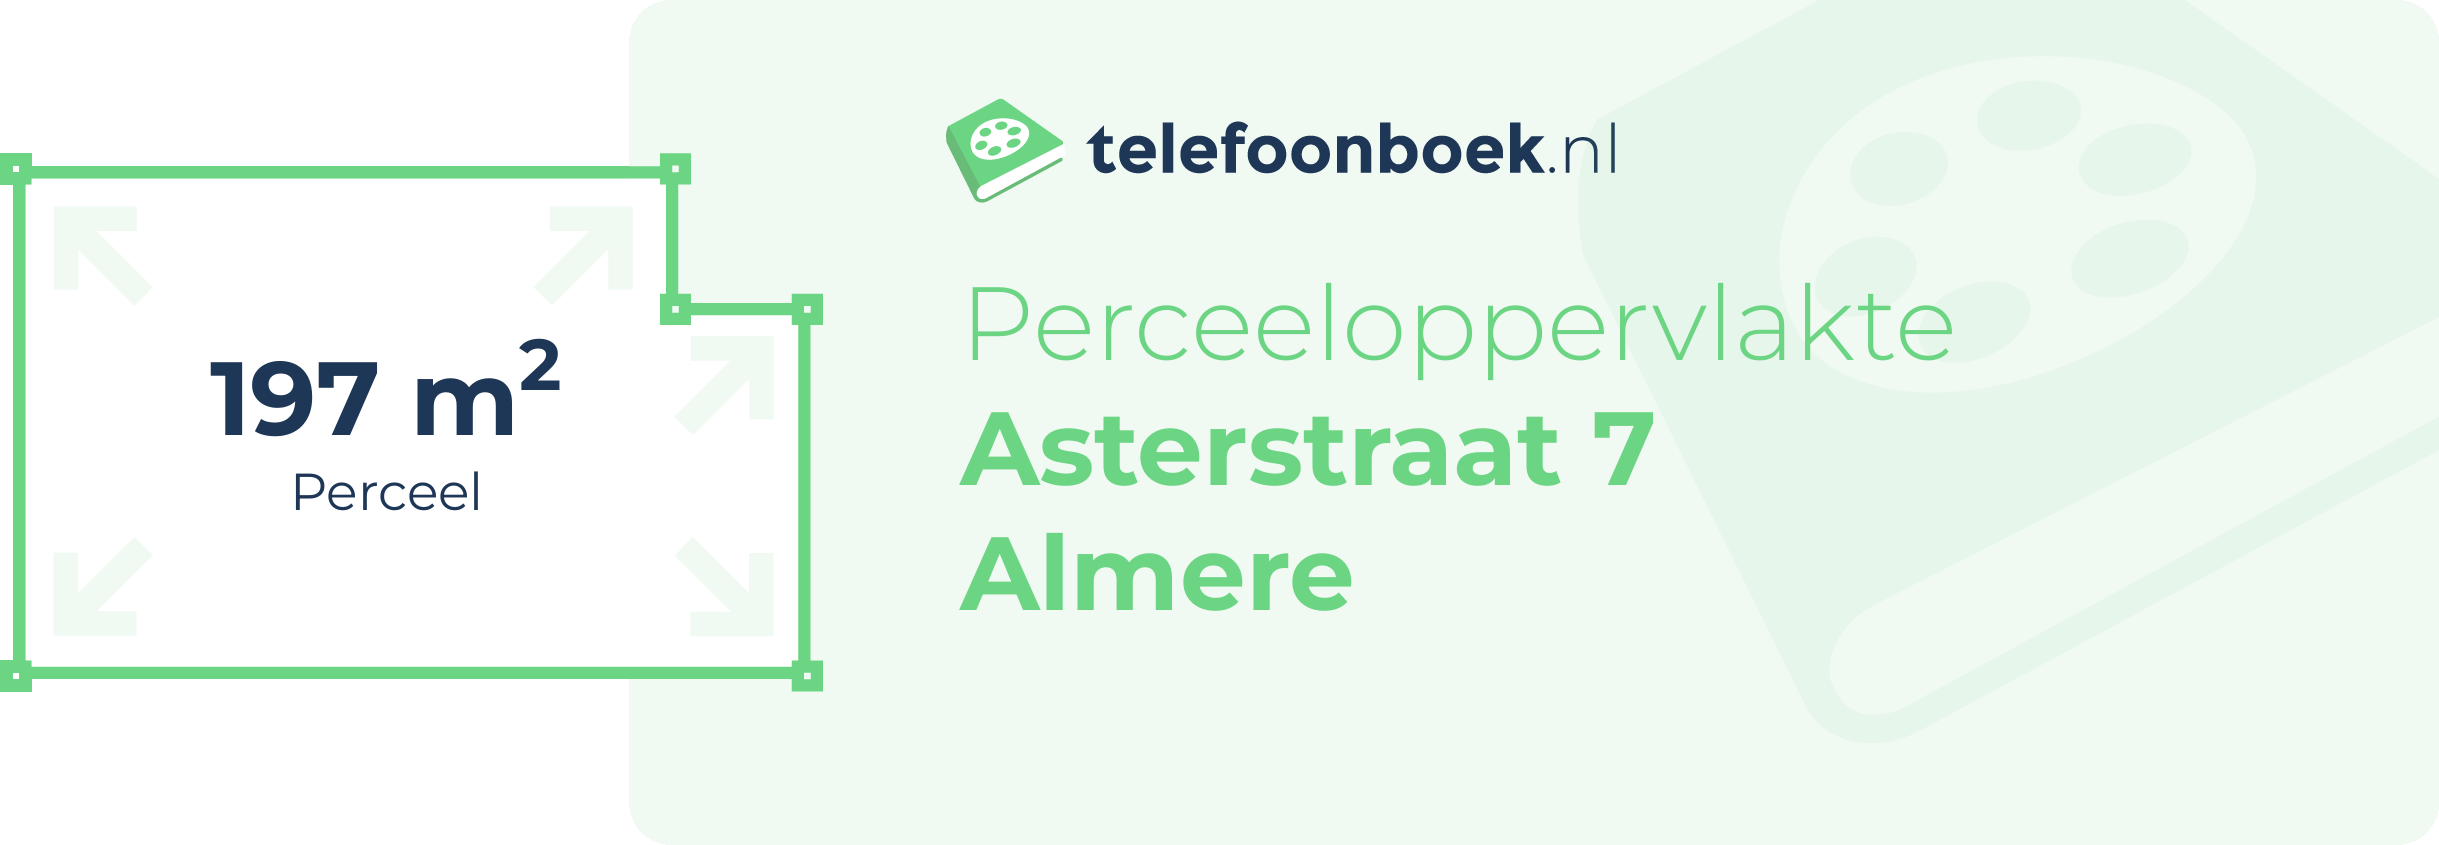 Perceeloppervlakte Asterstraat 7 Almere